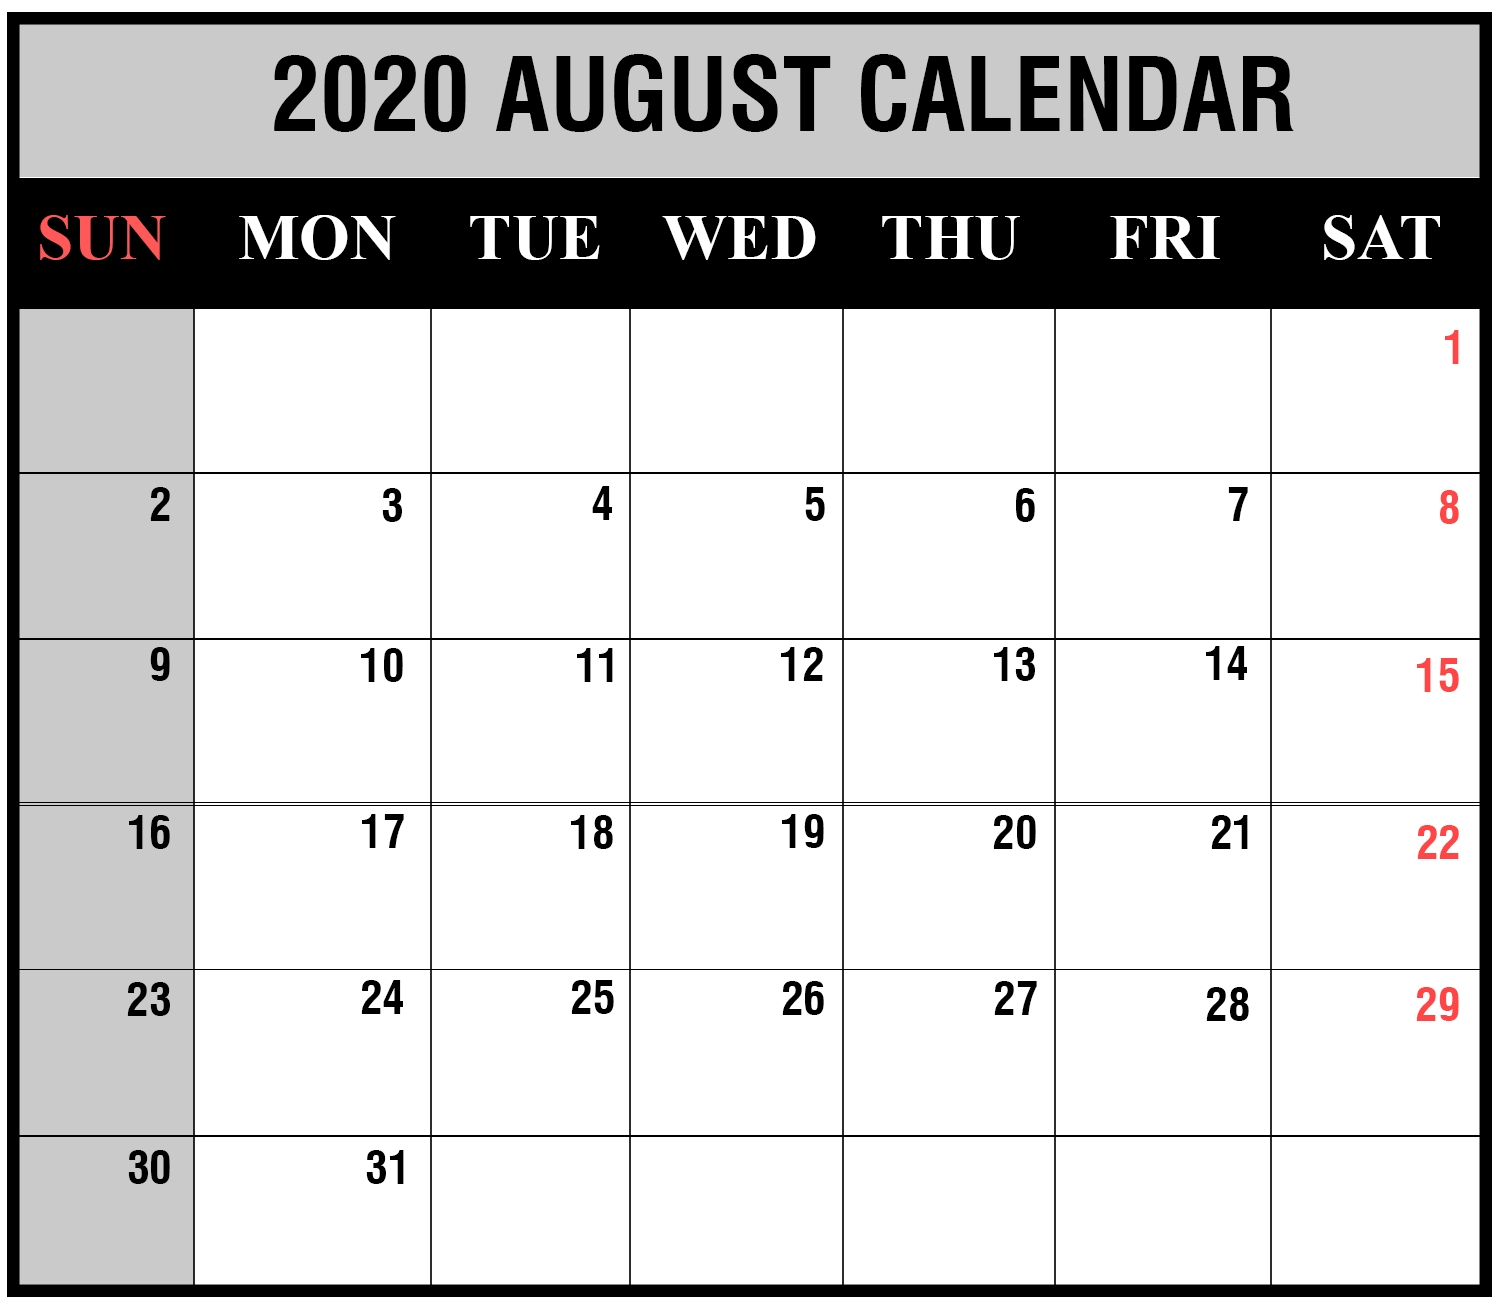 Insanity Max 30 Calendar Pdf | Calendar For Planning with regard to Calendar Insanity Max 30